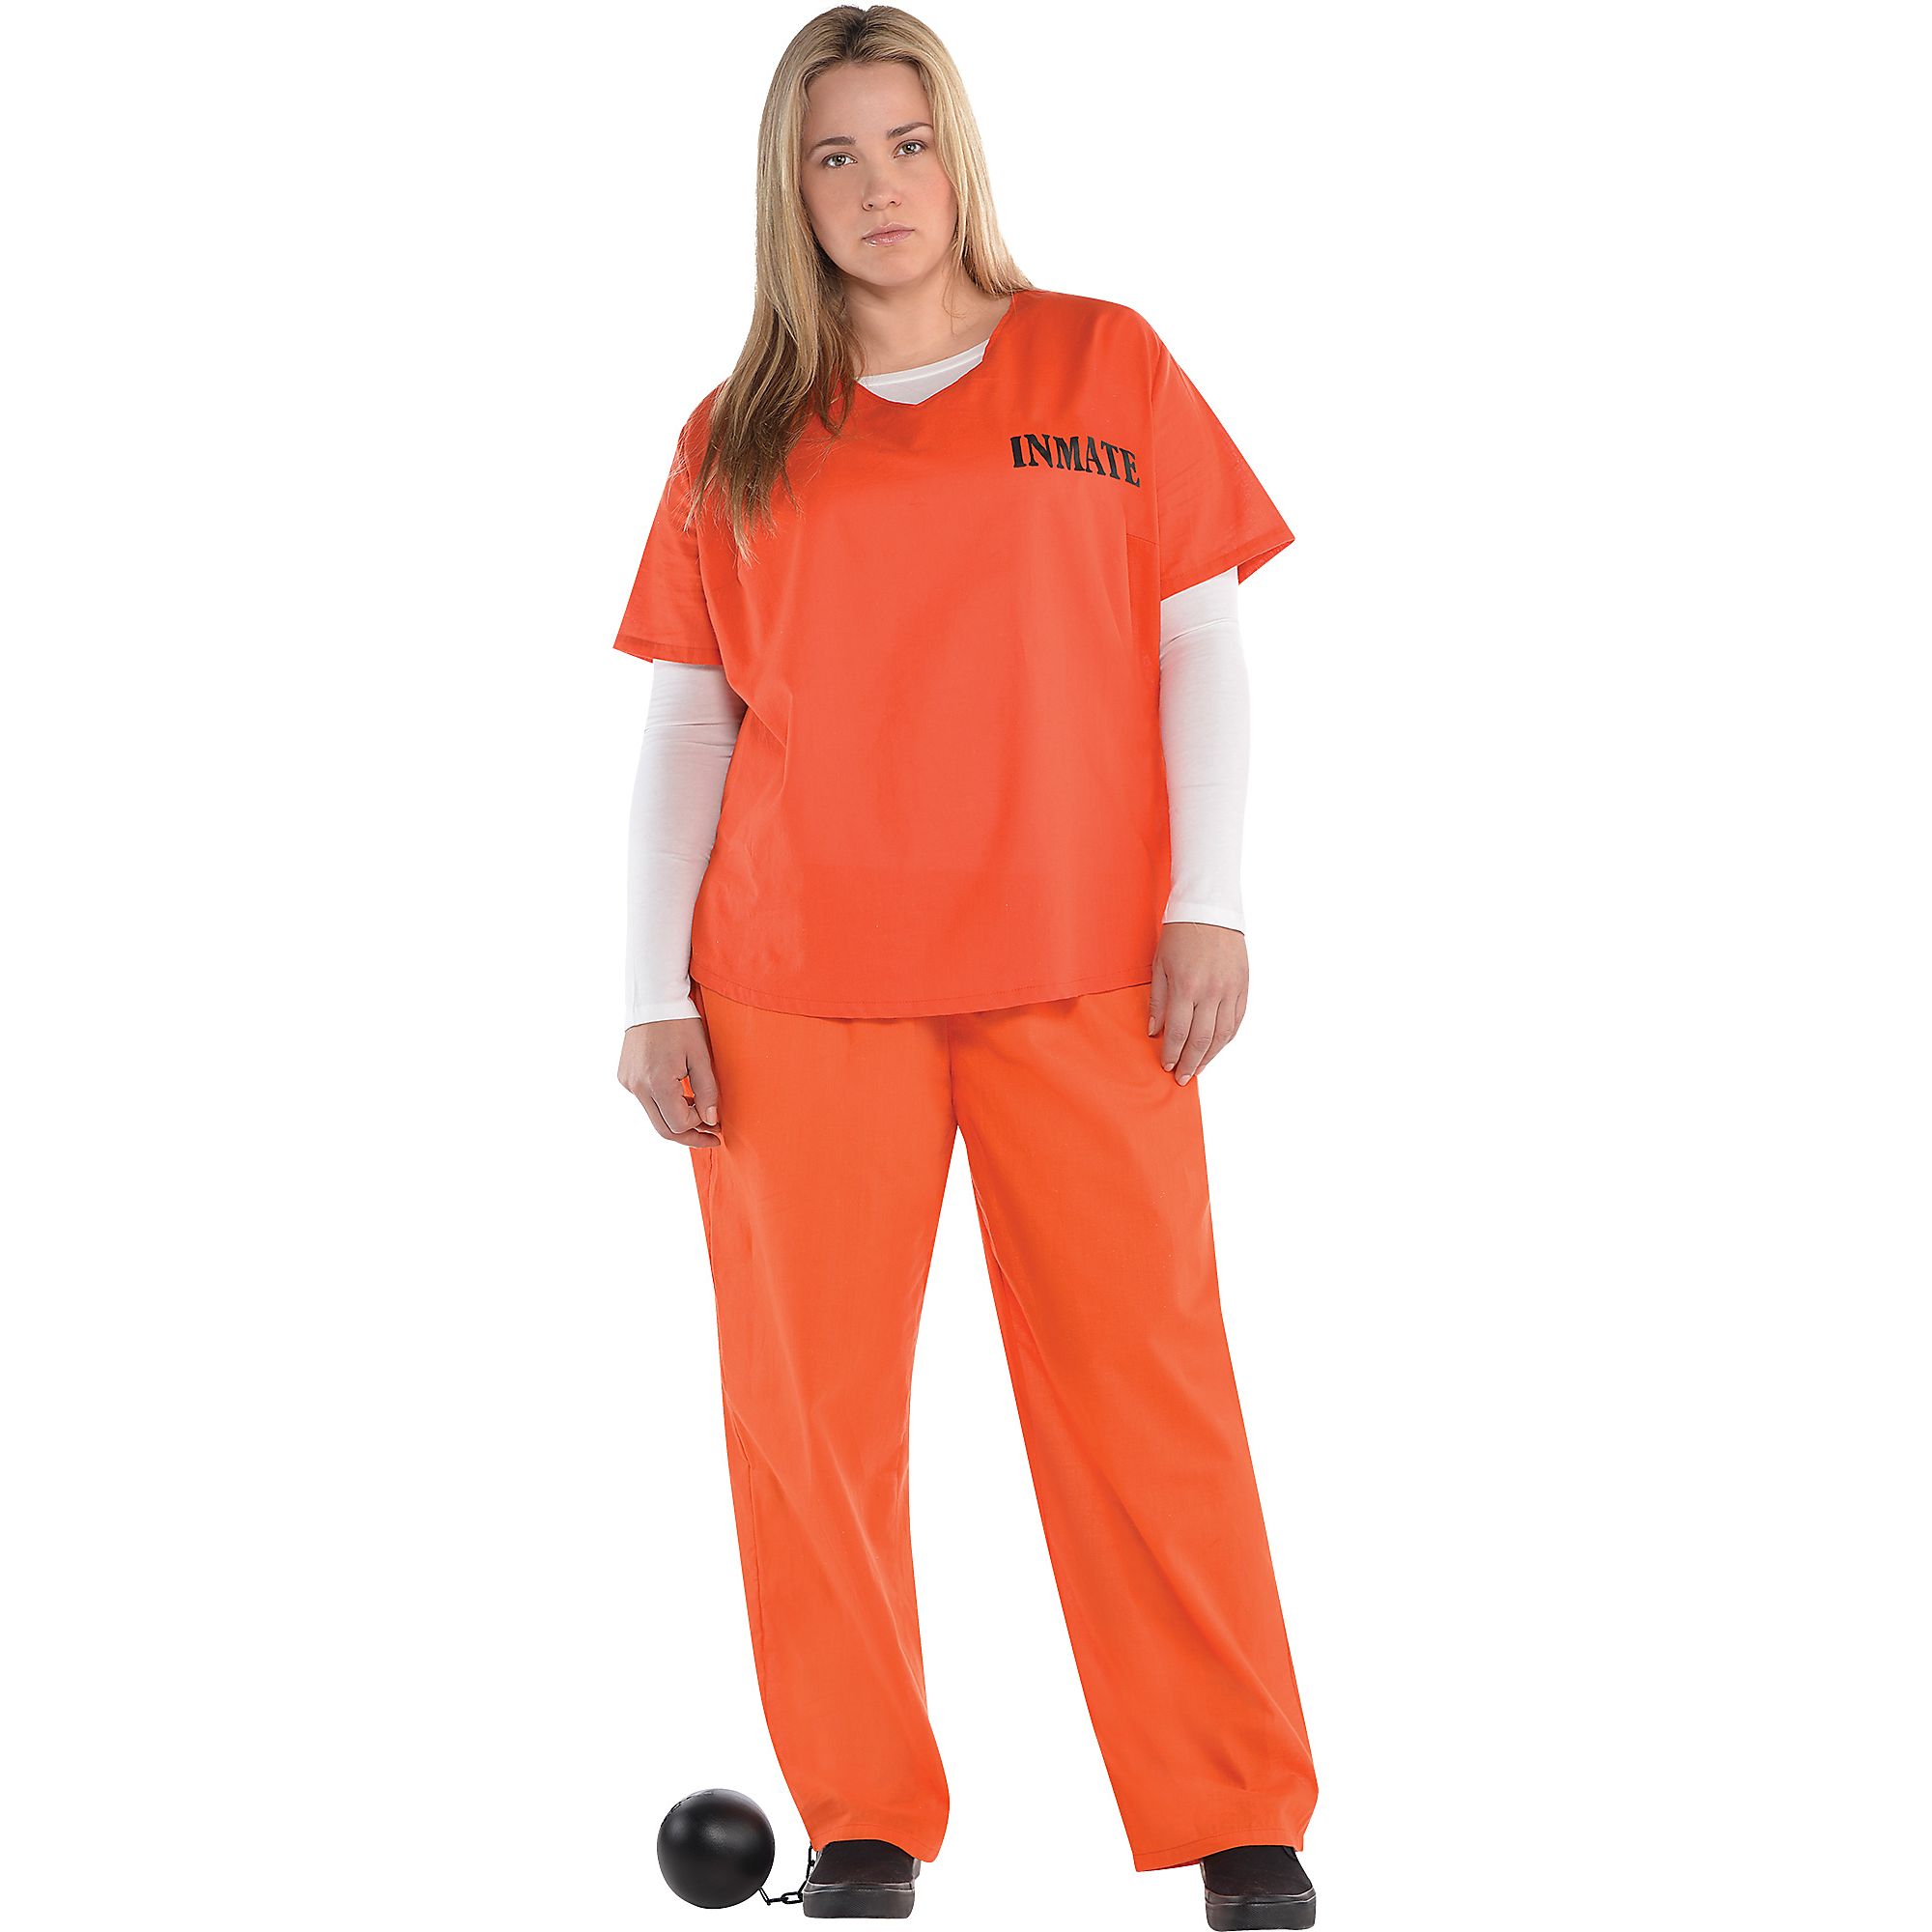 Womens Orange Prisoner Costume Plus Size Jumpsuit Prison Shirt And Pants 809801758796 Ebay 